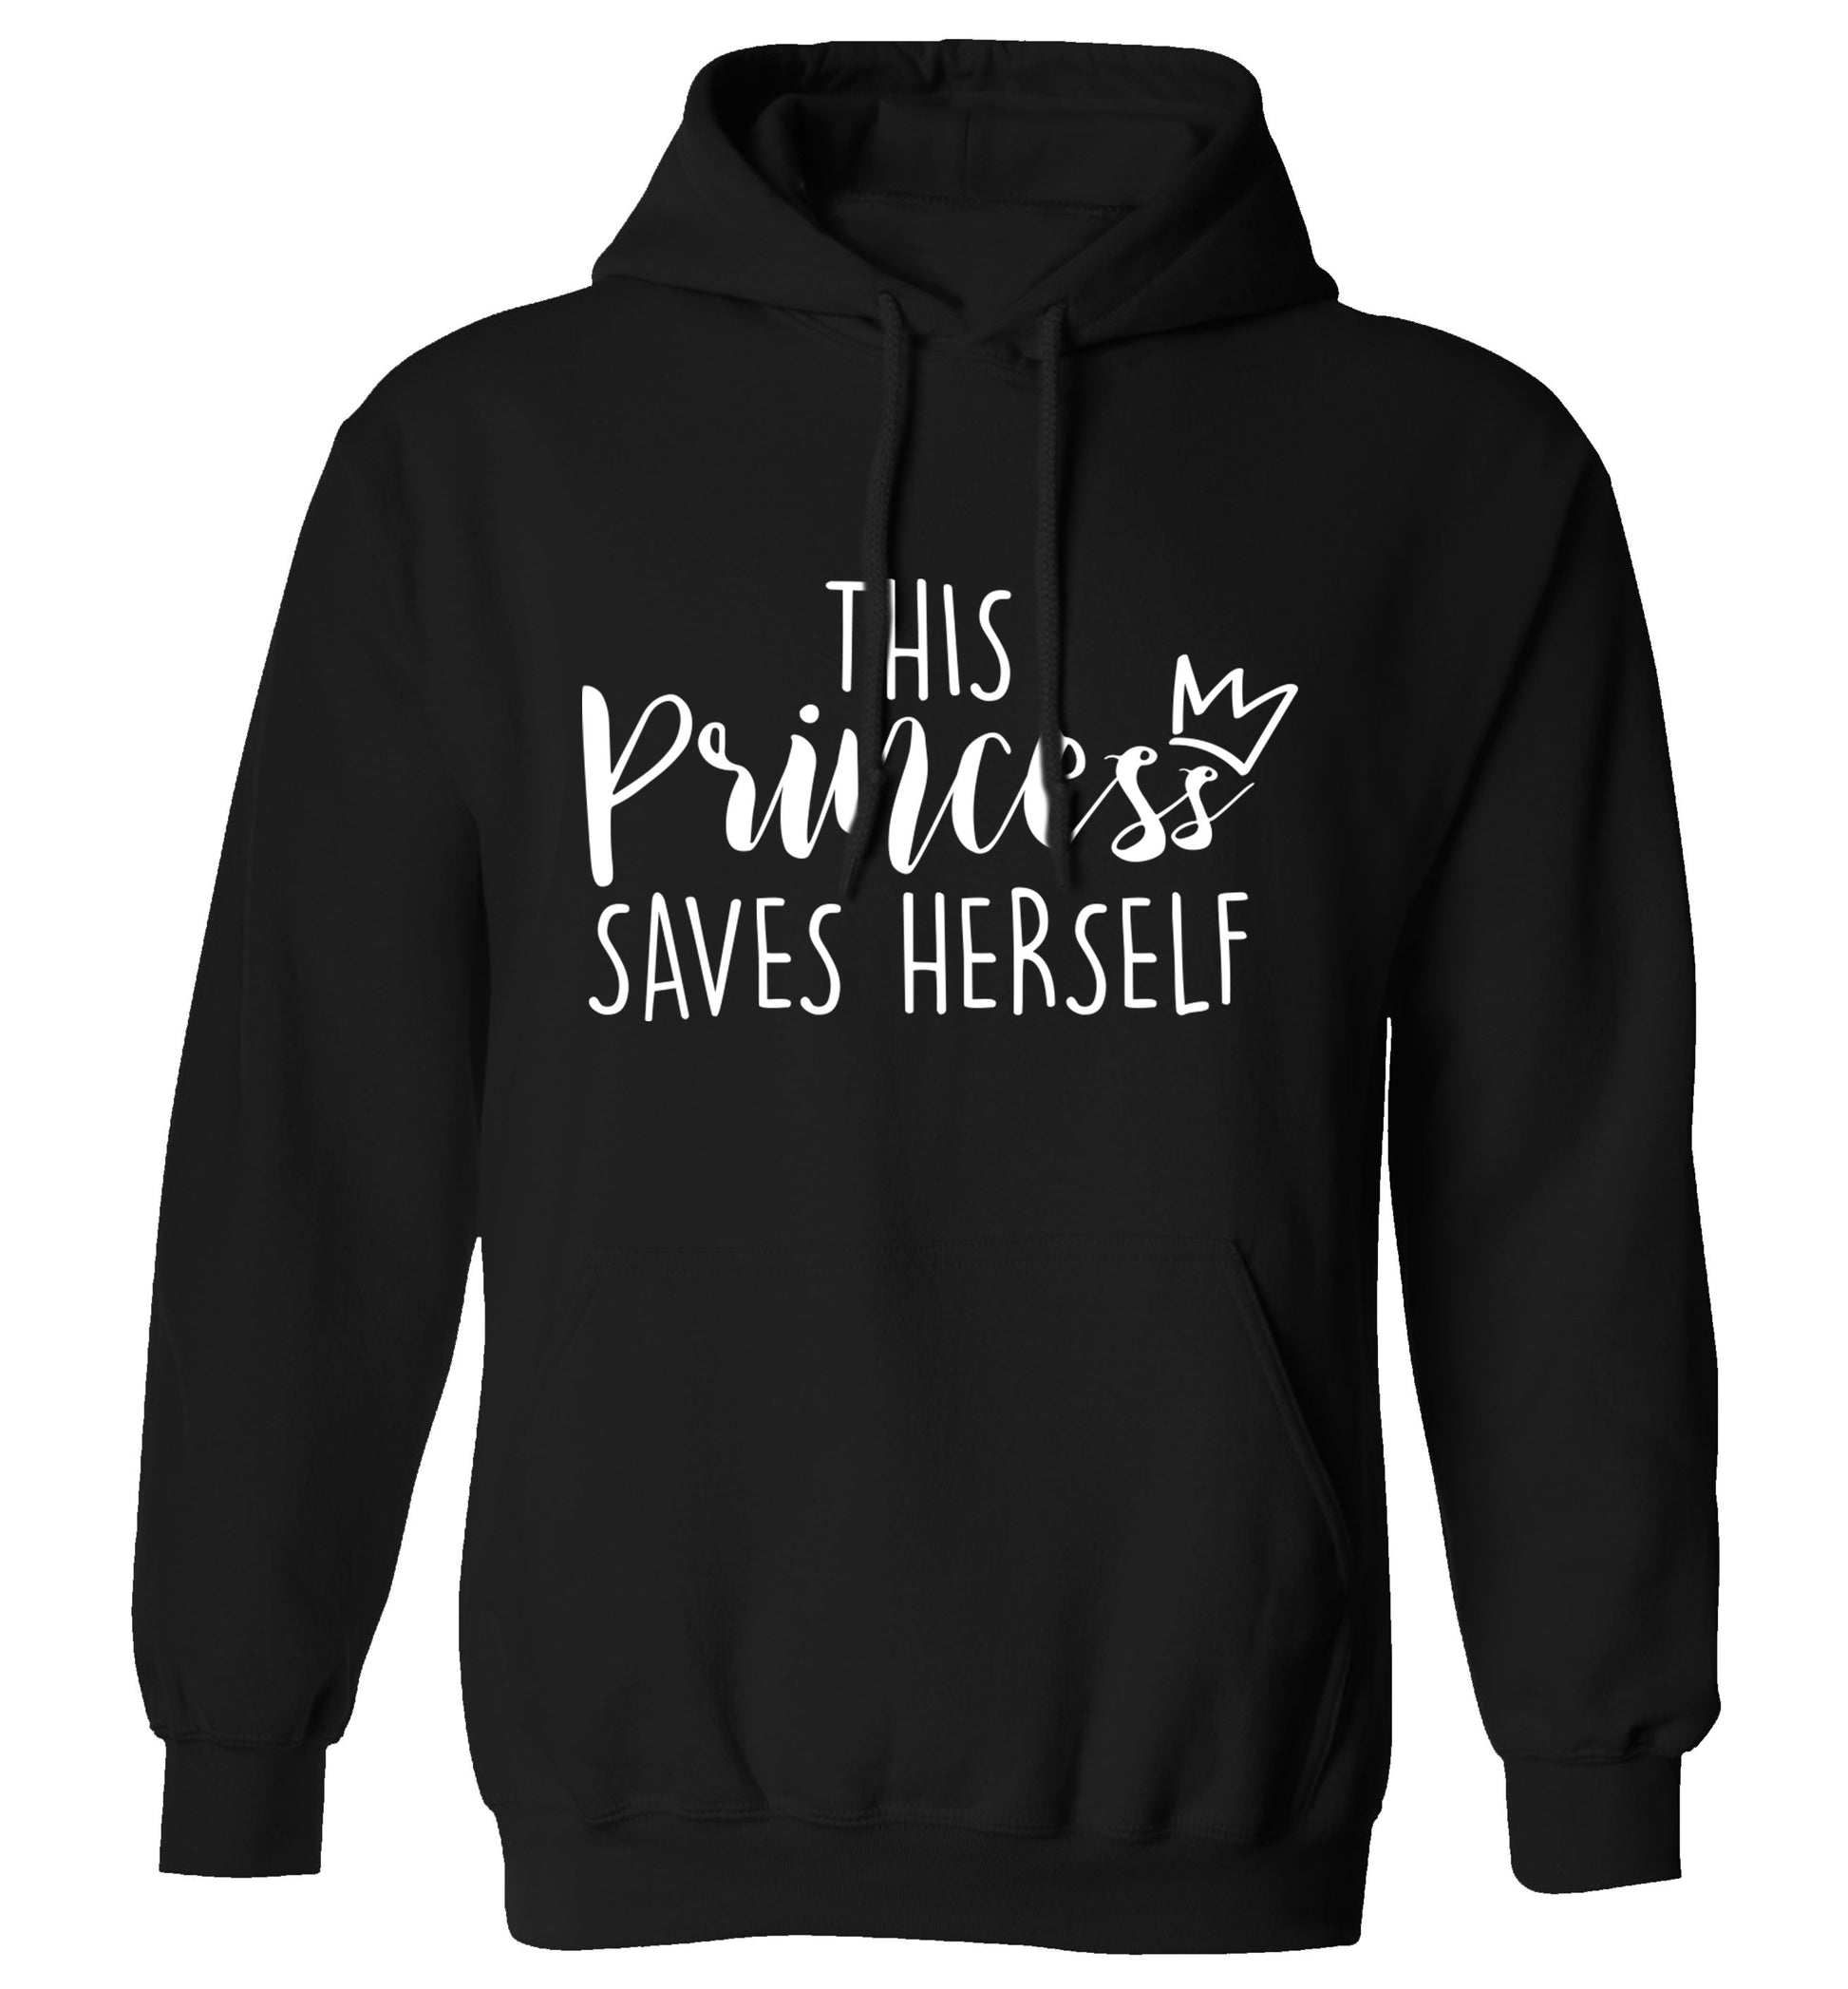 This princess saves herself adults unisex black hoodie 2XL